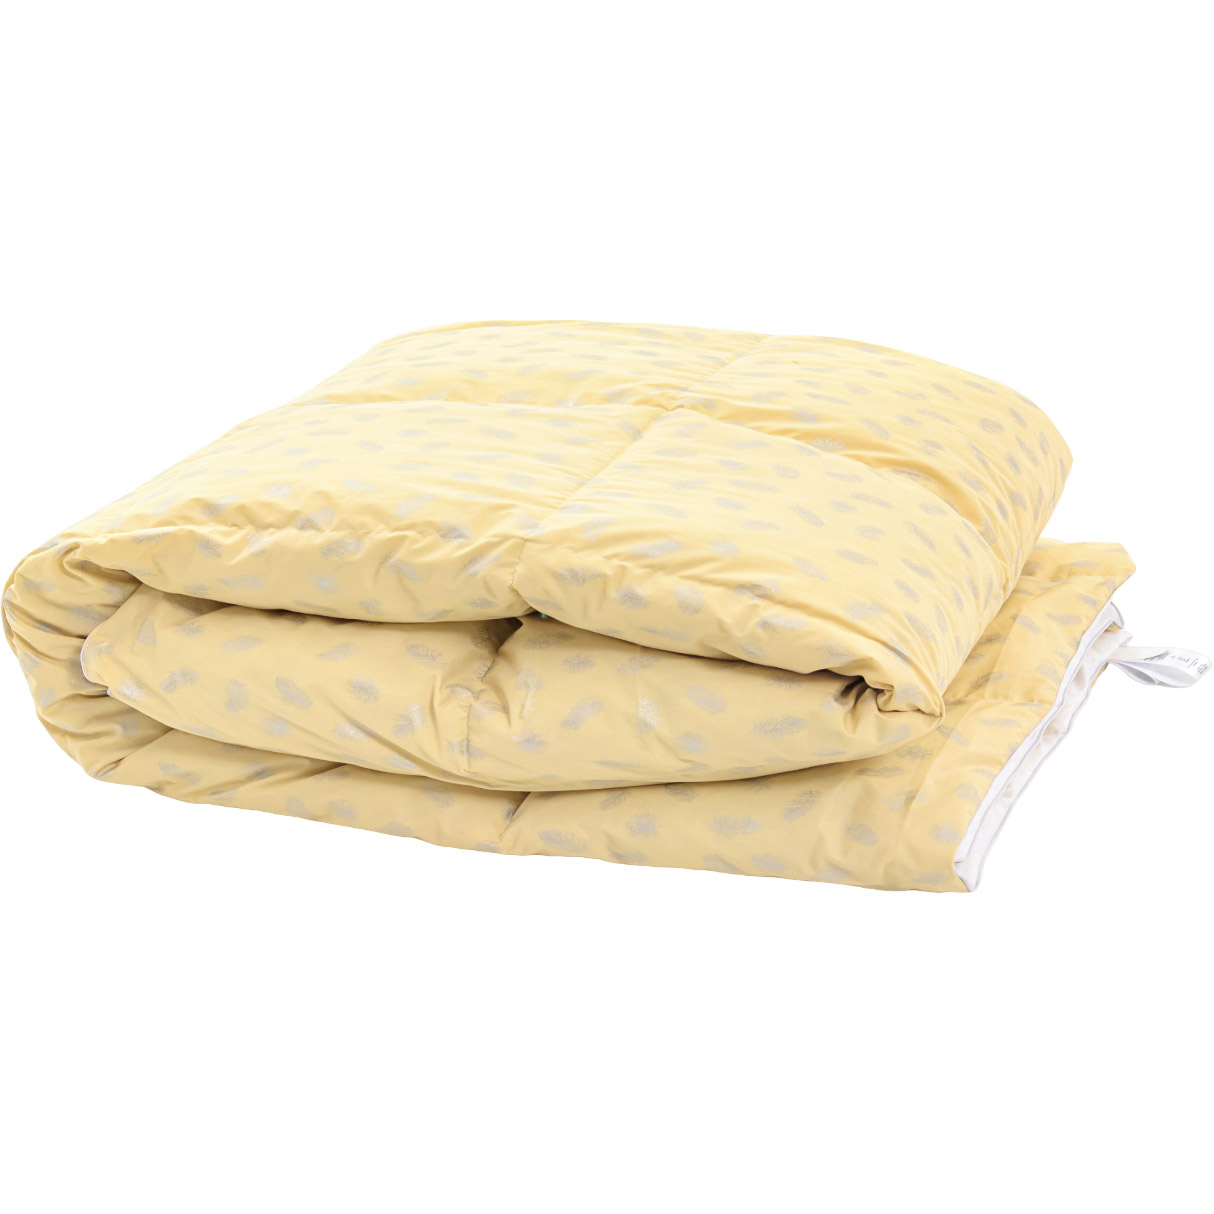 Одеяло пуховое MirSon Karmen №1827 Bio-Beige, 90% пух, двуспальное, 205x172, бежевое (2200003012859) - фото 1